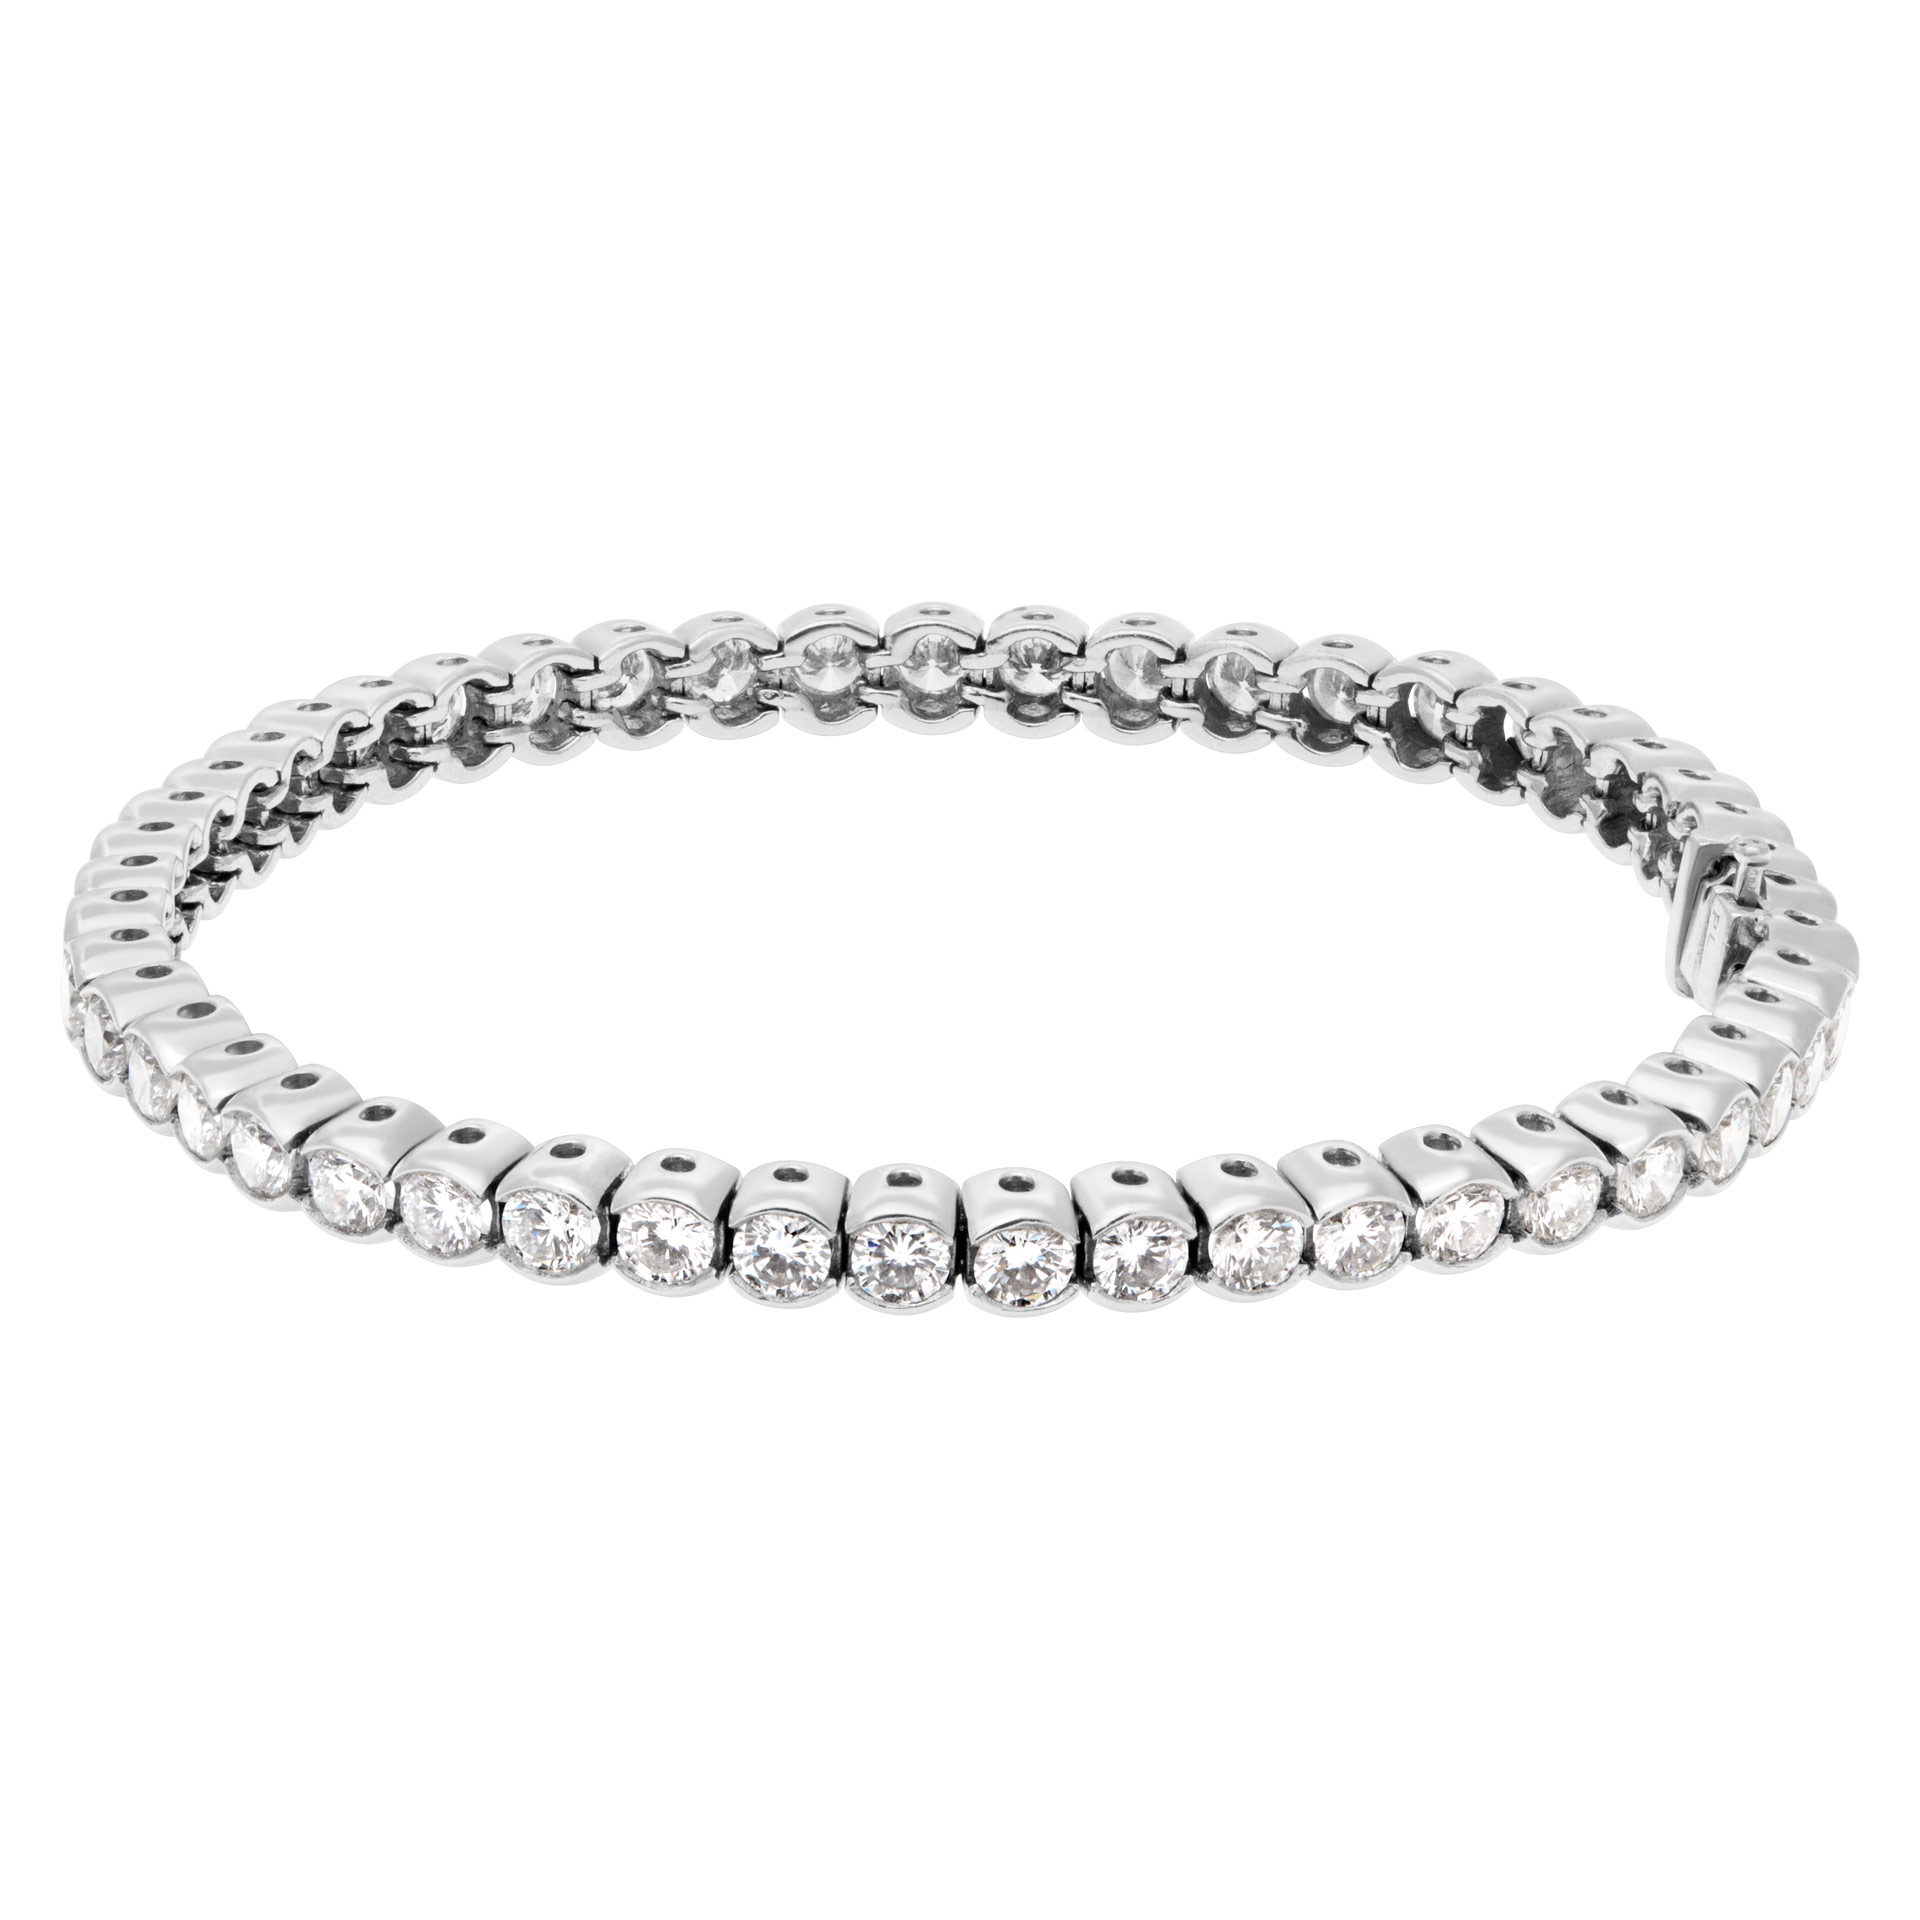 Platinum diamond line bracelet with approx. 7.35 carats (G color, VS1 clarity)